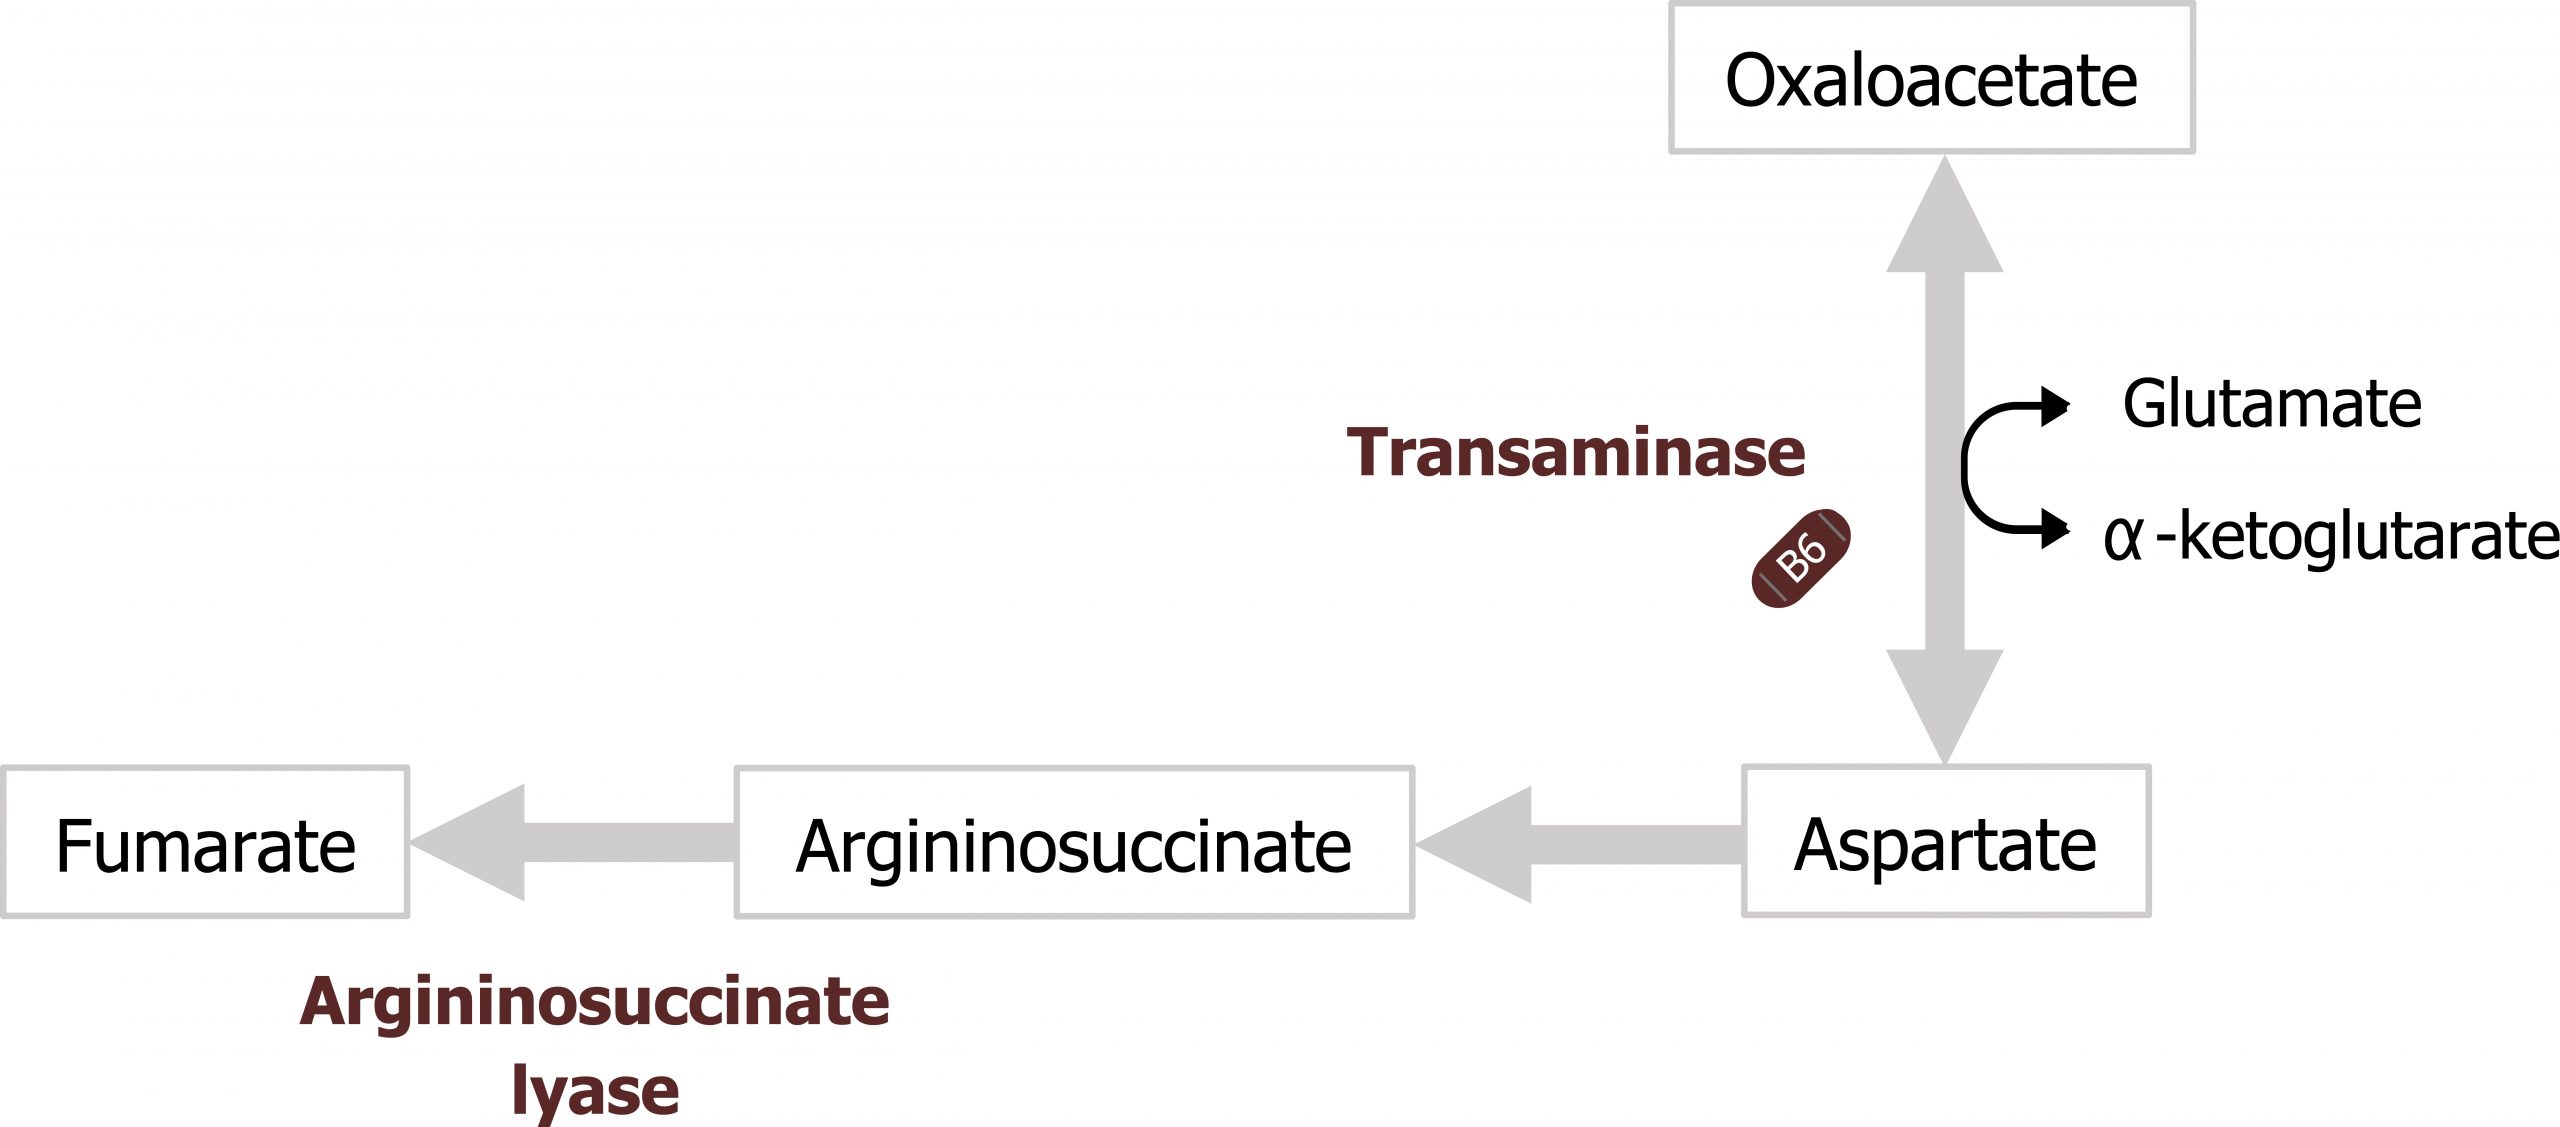 Oxaloacetate bidirectional arrow with enzyme transaminase and glutamate bidirectional arrow α-ketoglutarate to aspartate arrow argininosuccinate arrow with enzyme argininosuccinate lyase to fumarate